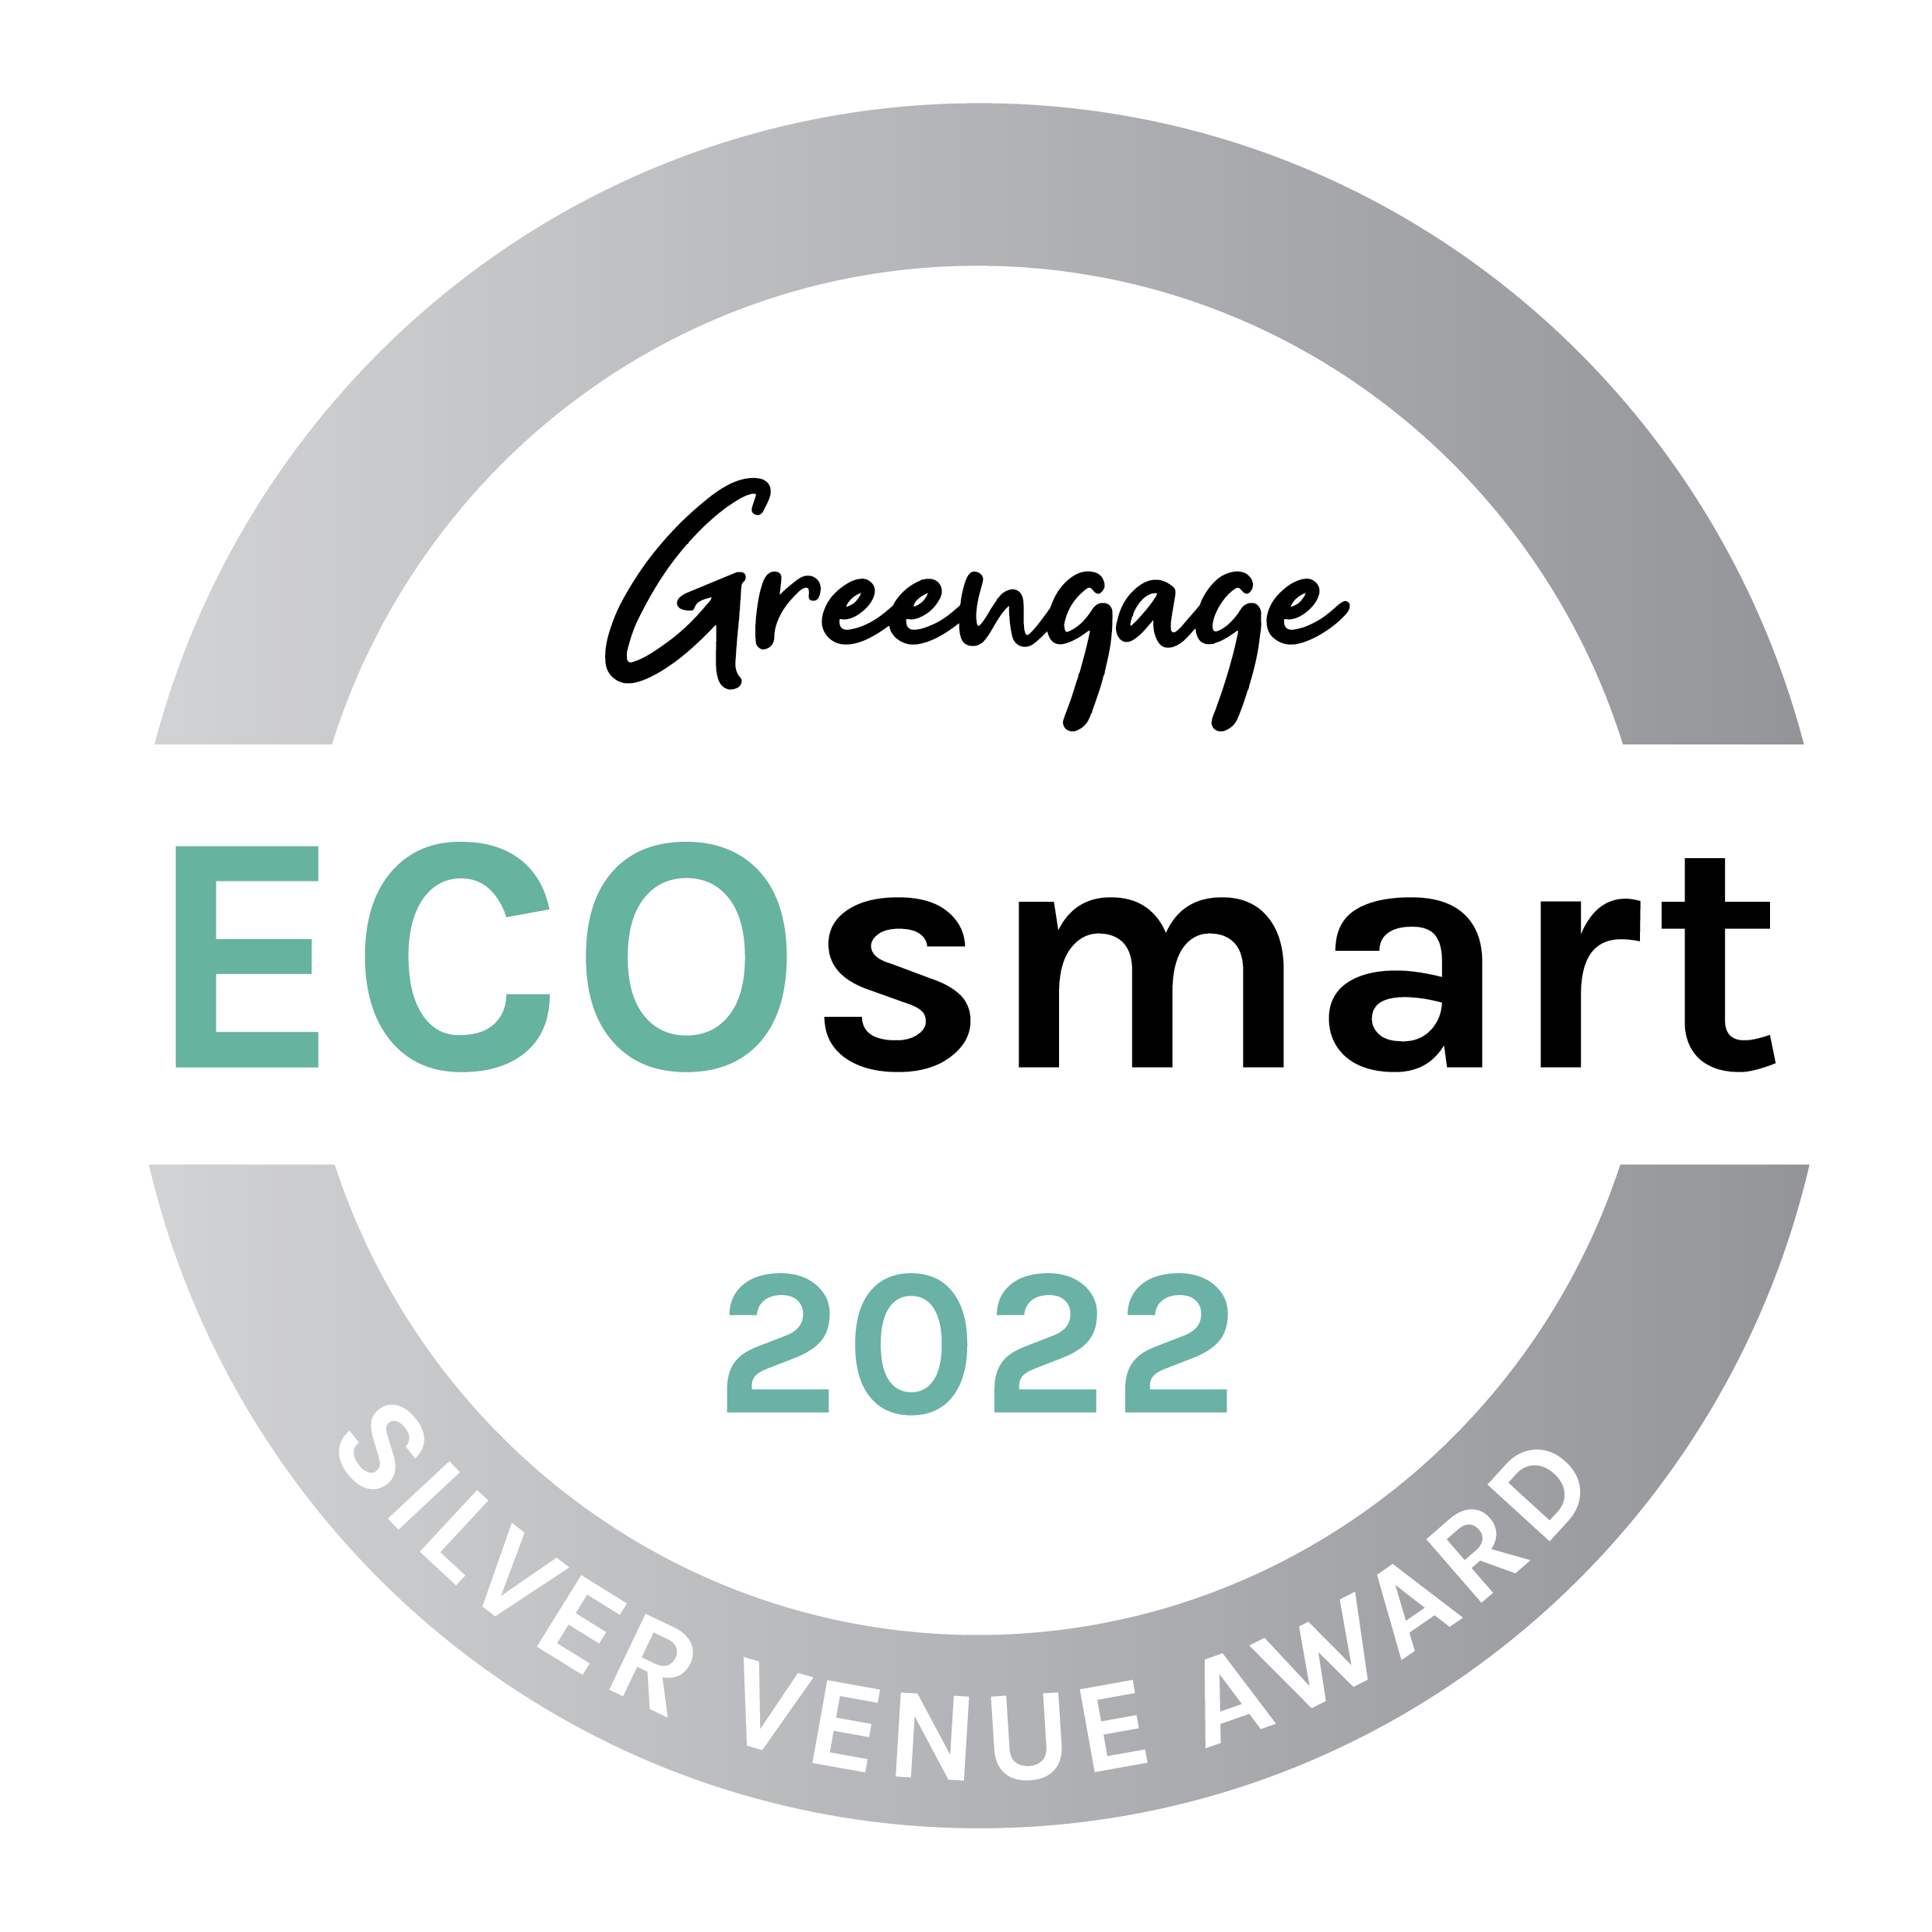 ECOsmart Silver award